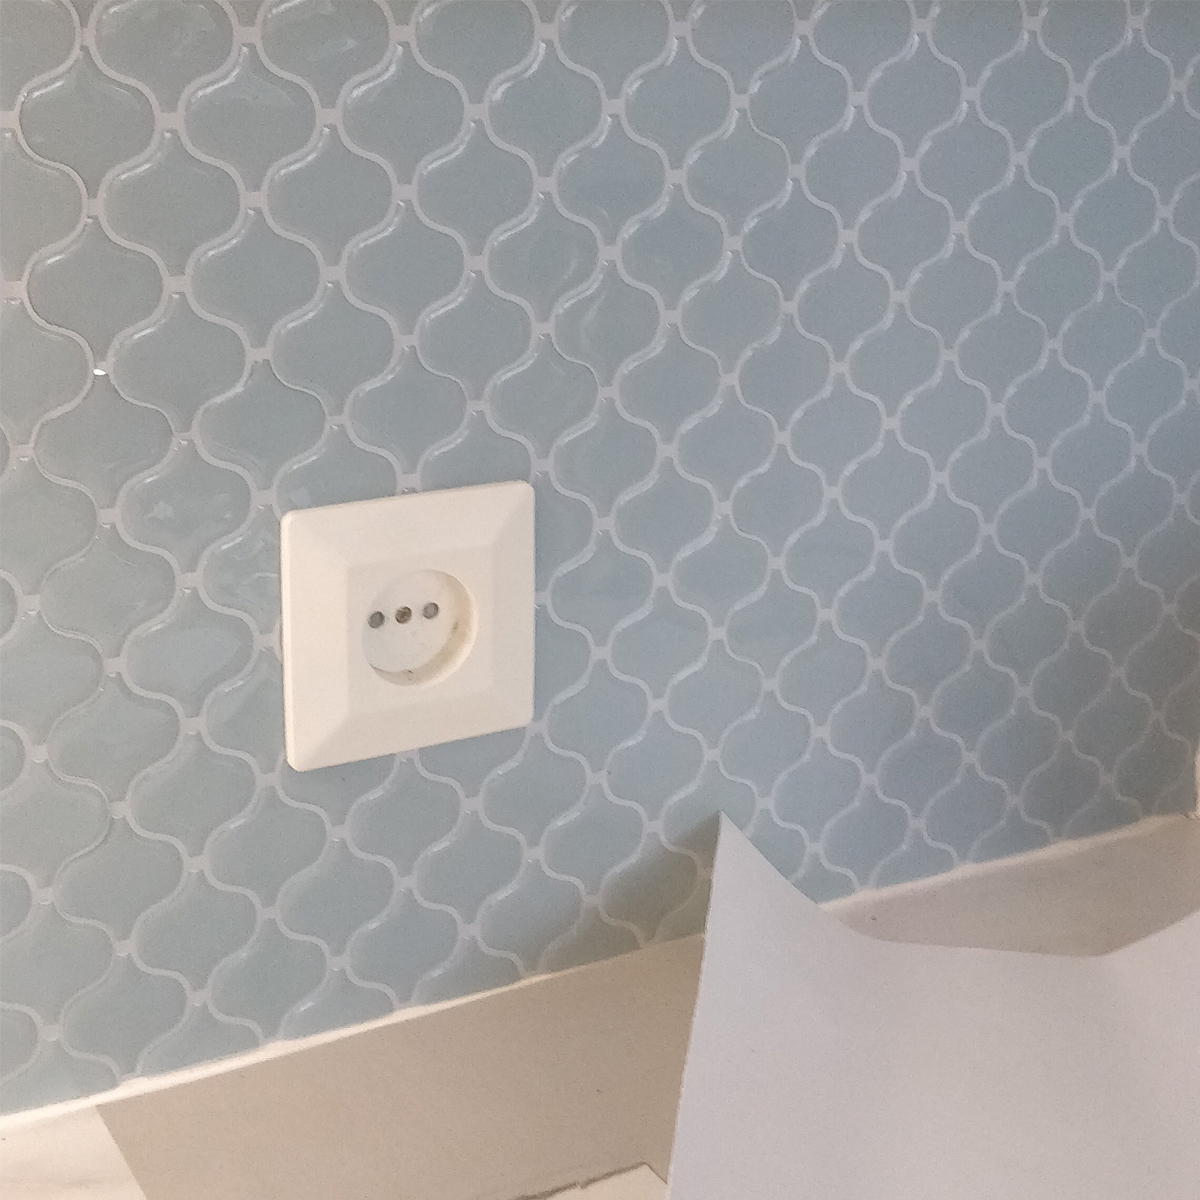 DIY-3D-Self-Adhesive-Wall-Tile-Sticker-Vinyl-Home-Kitchen-Bathroom-Decal-Decoration-1823170-3